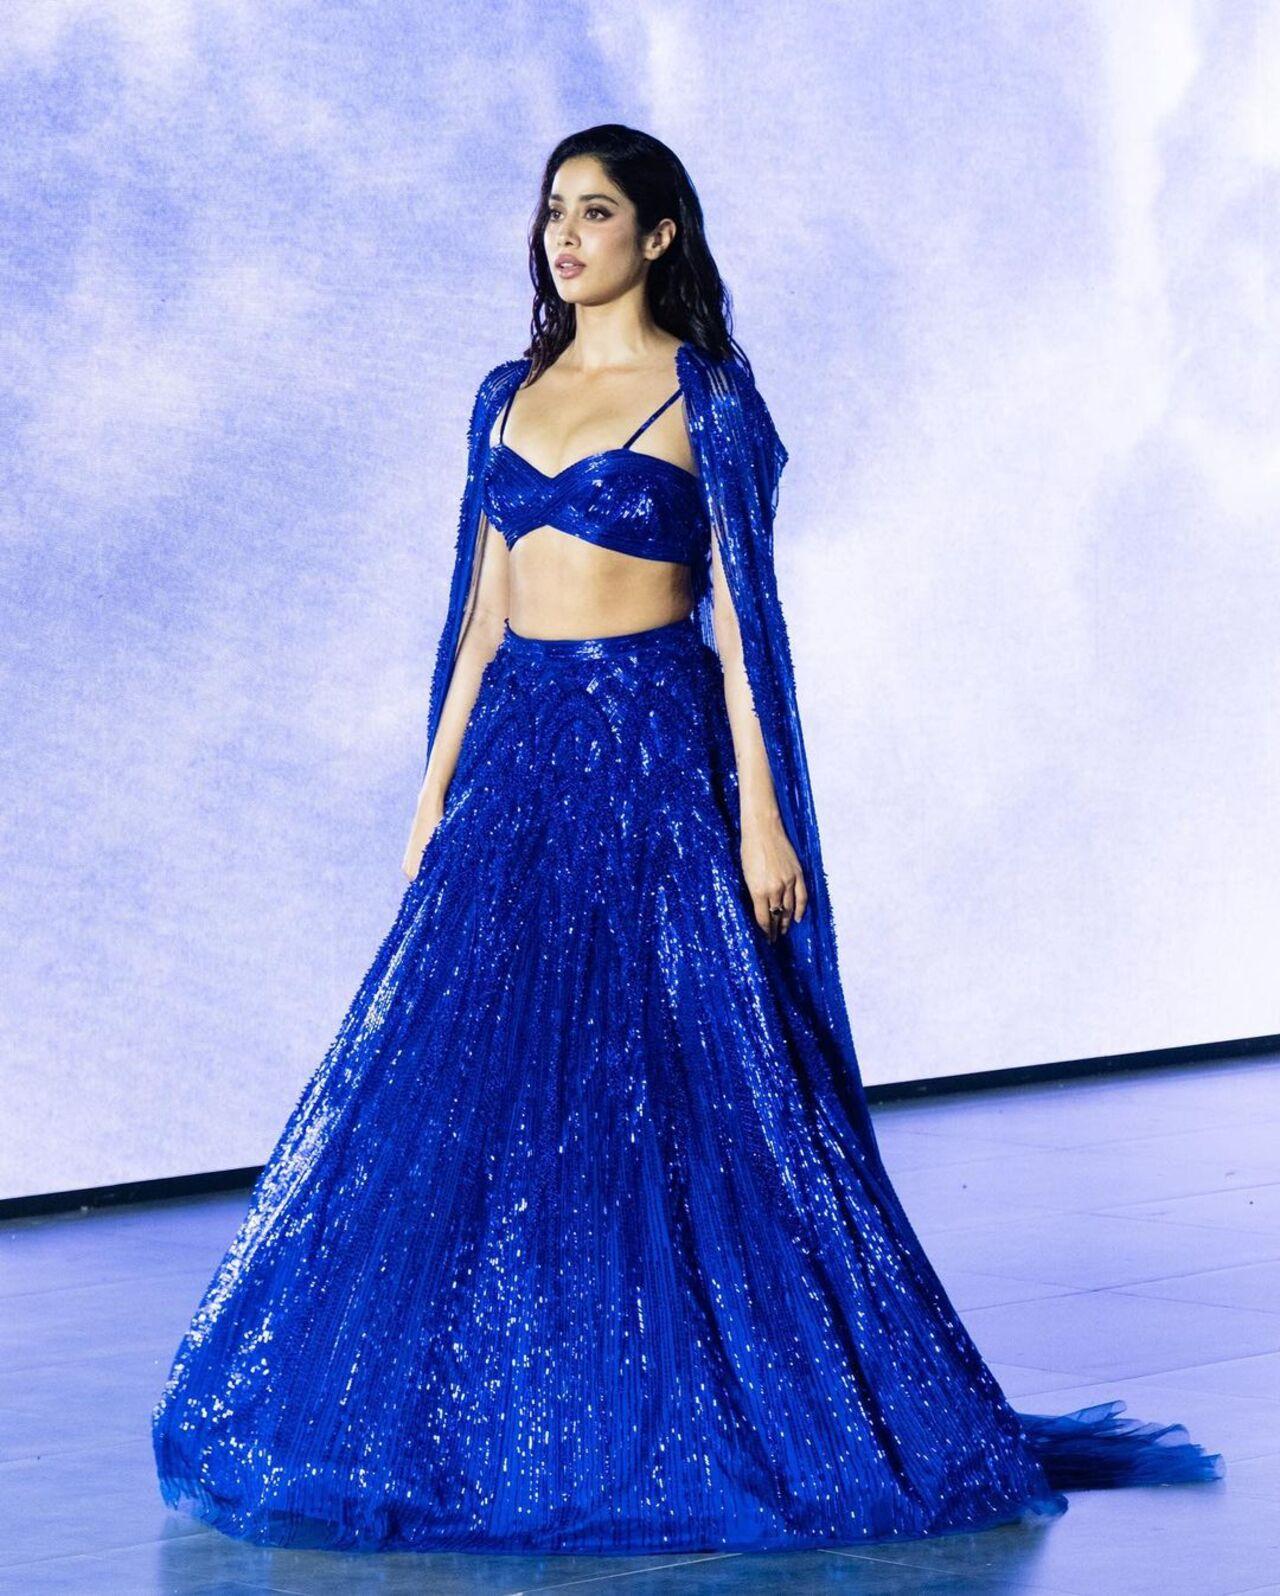 Janhvi Kapoor looks like an absolute diva in this shiny blue lehenga and the dupatta worn like a cape